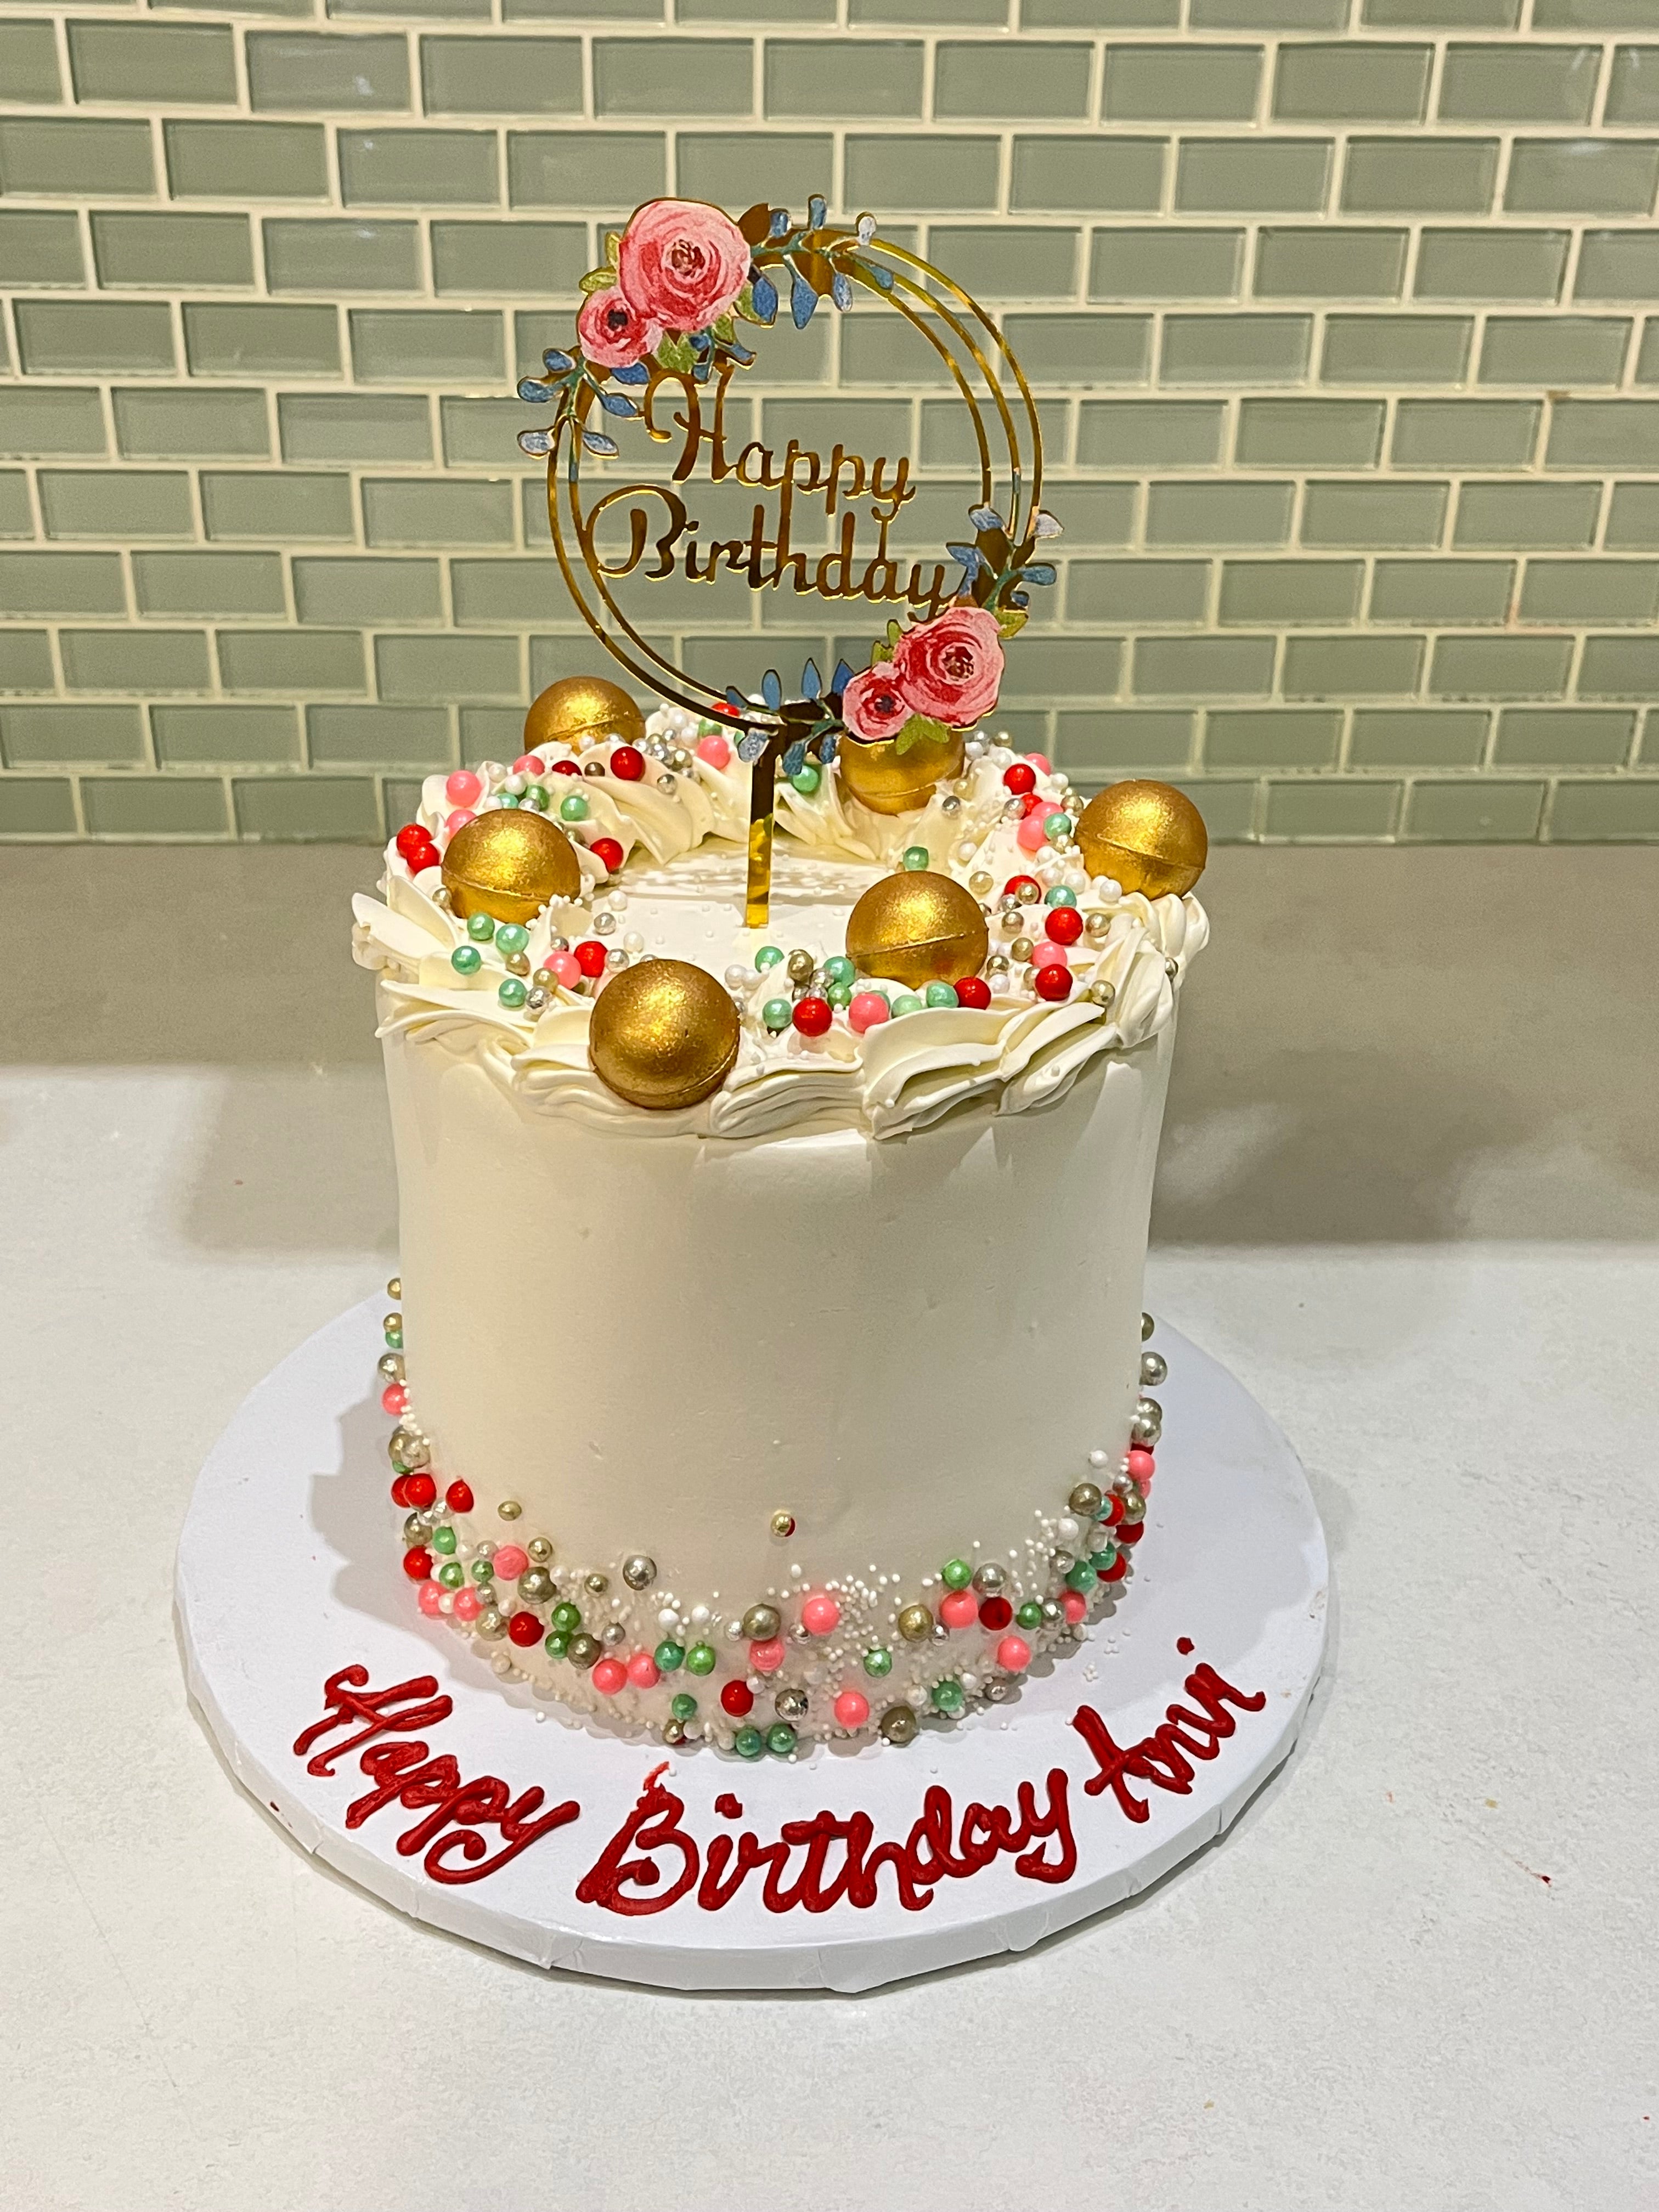 Details more than 81 happy birthday anvi cake - in.daotaonec